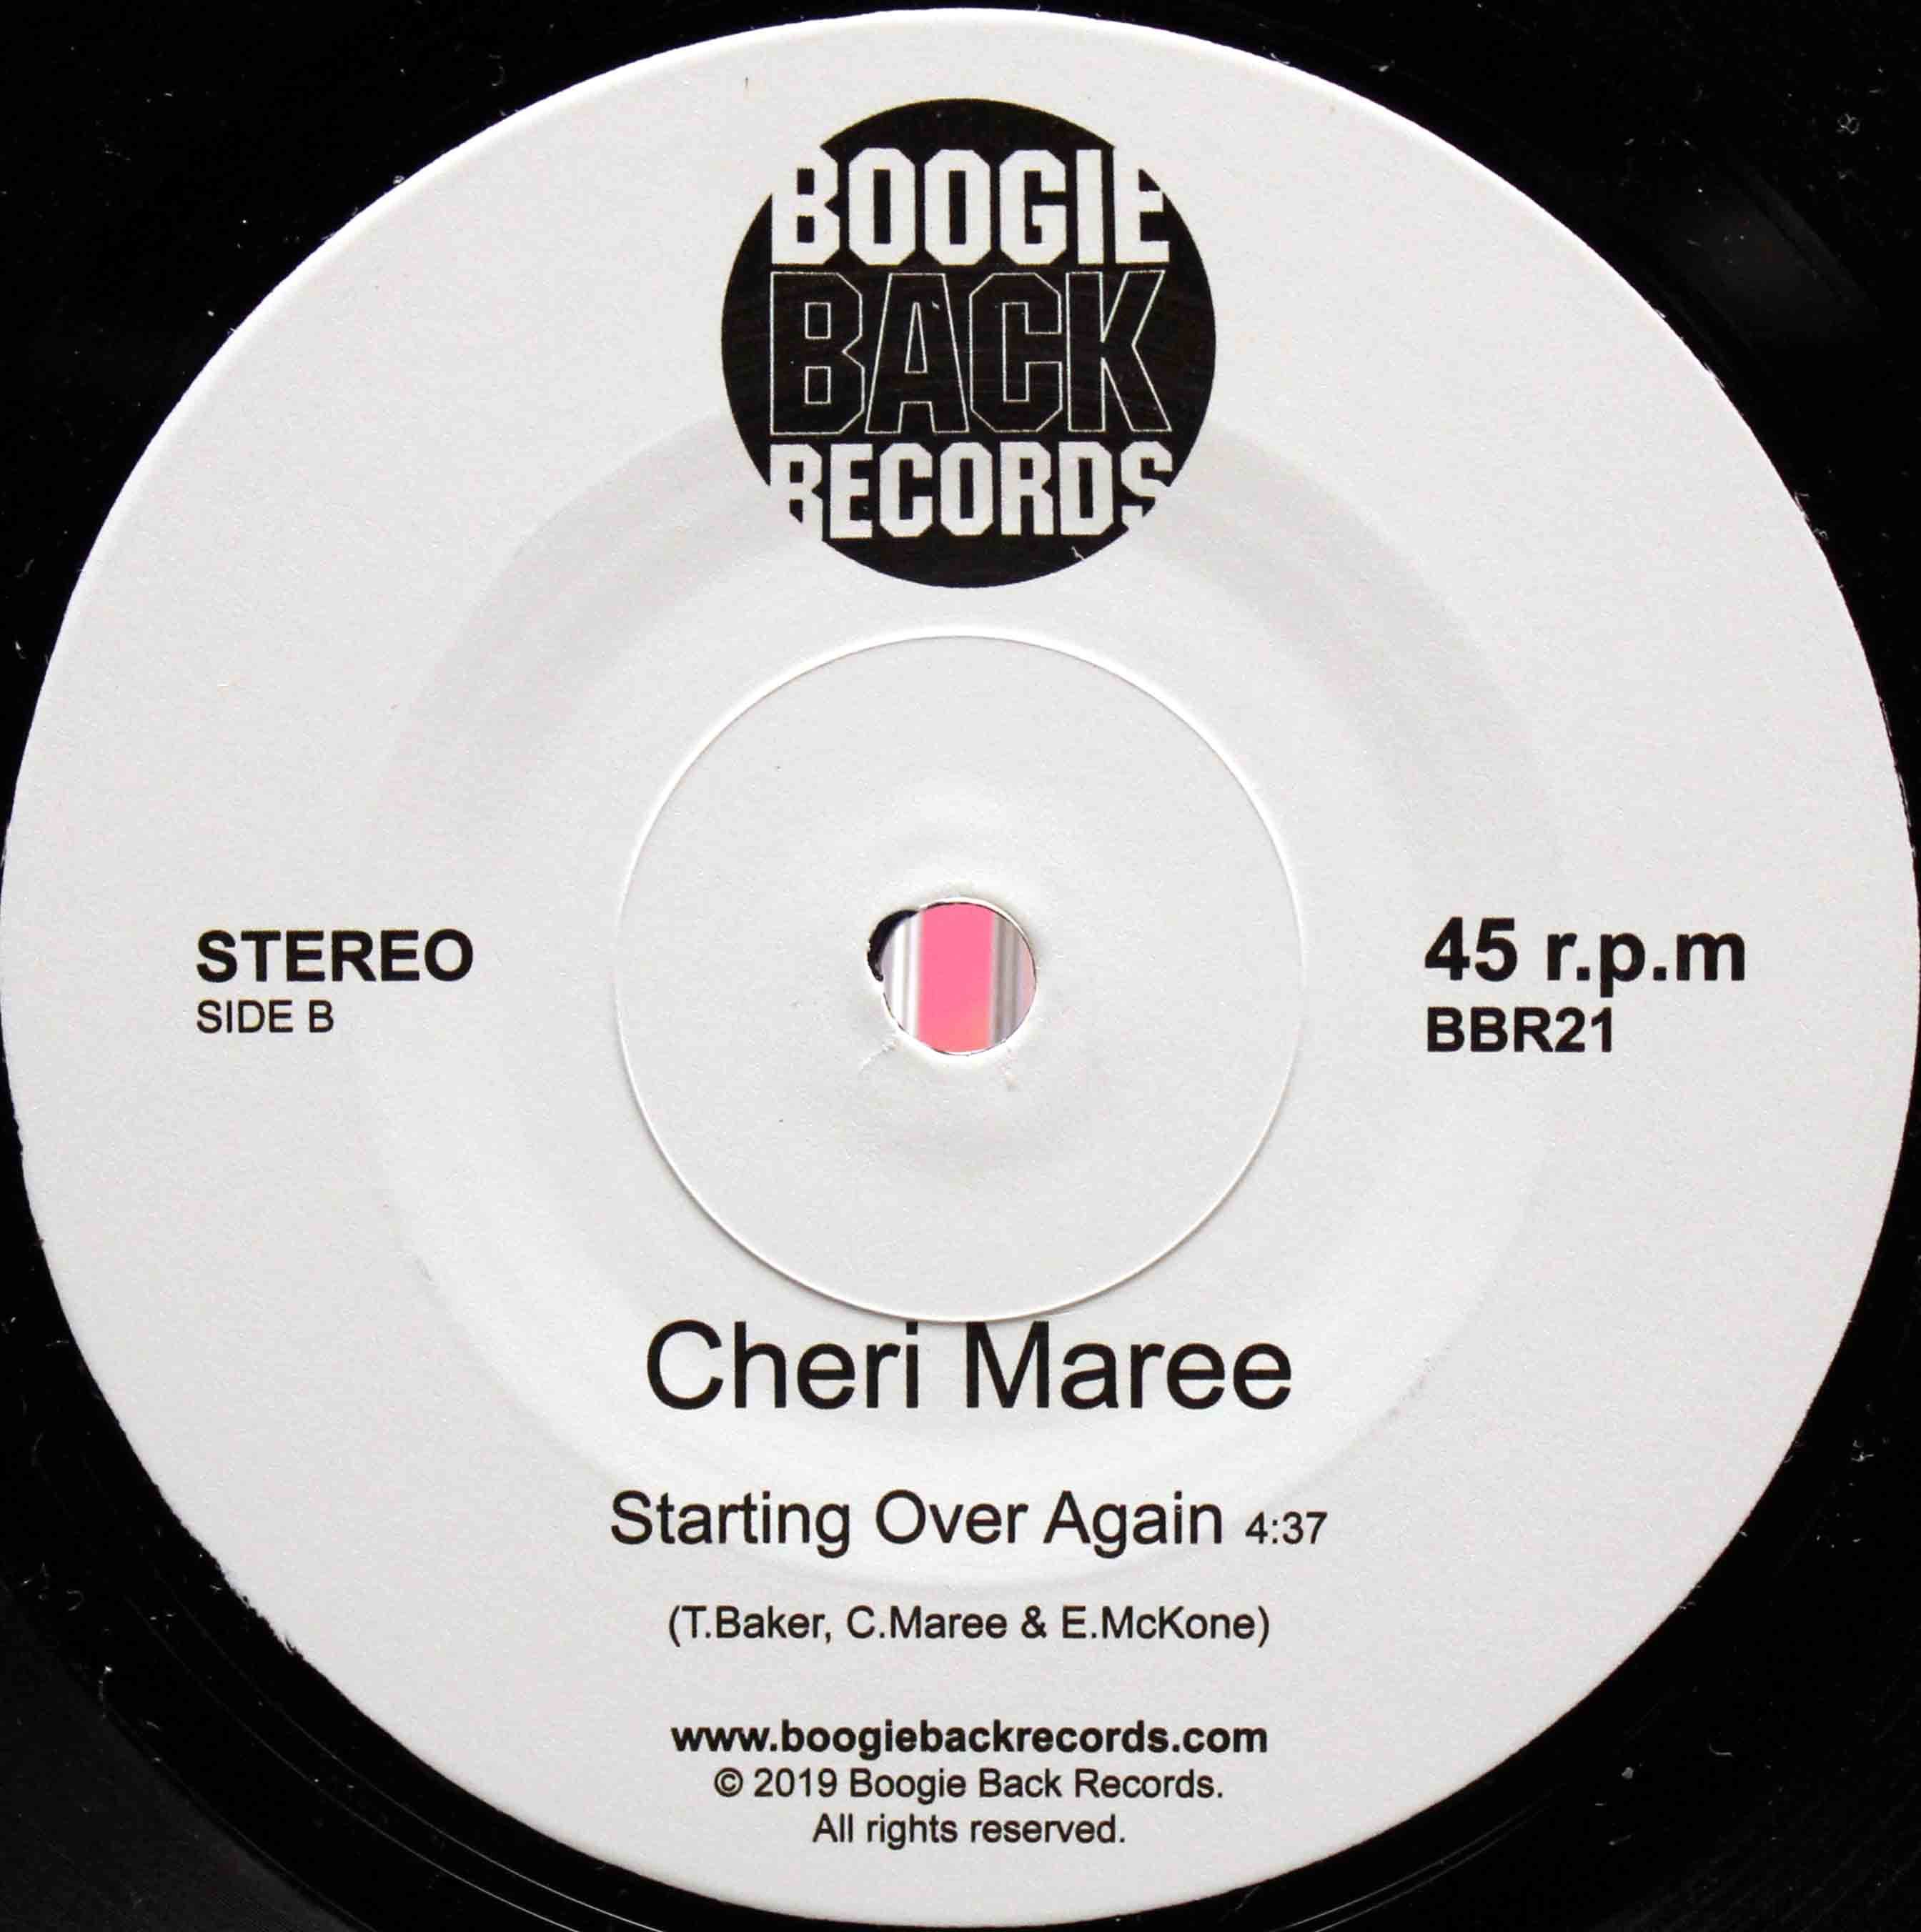 Cheri Maree – I Want You Back 06